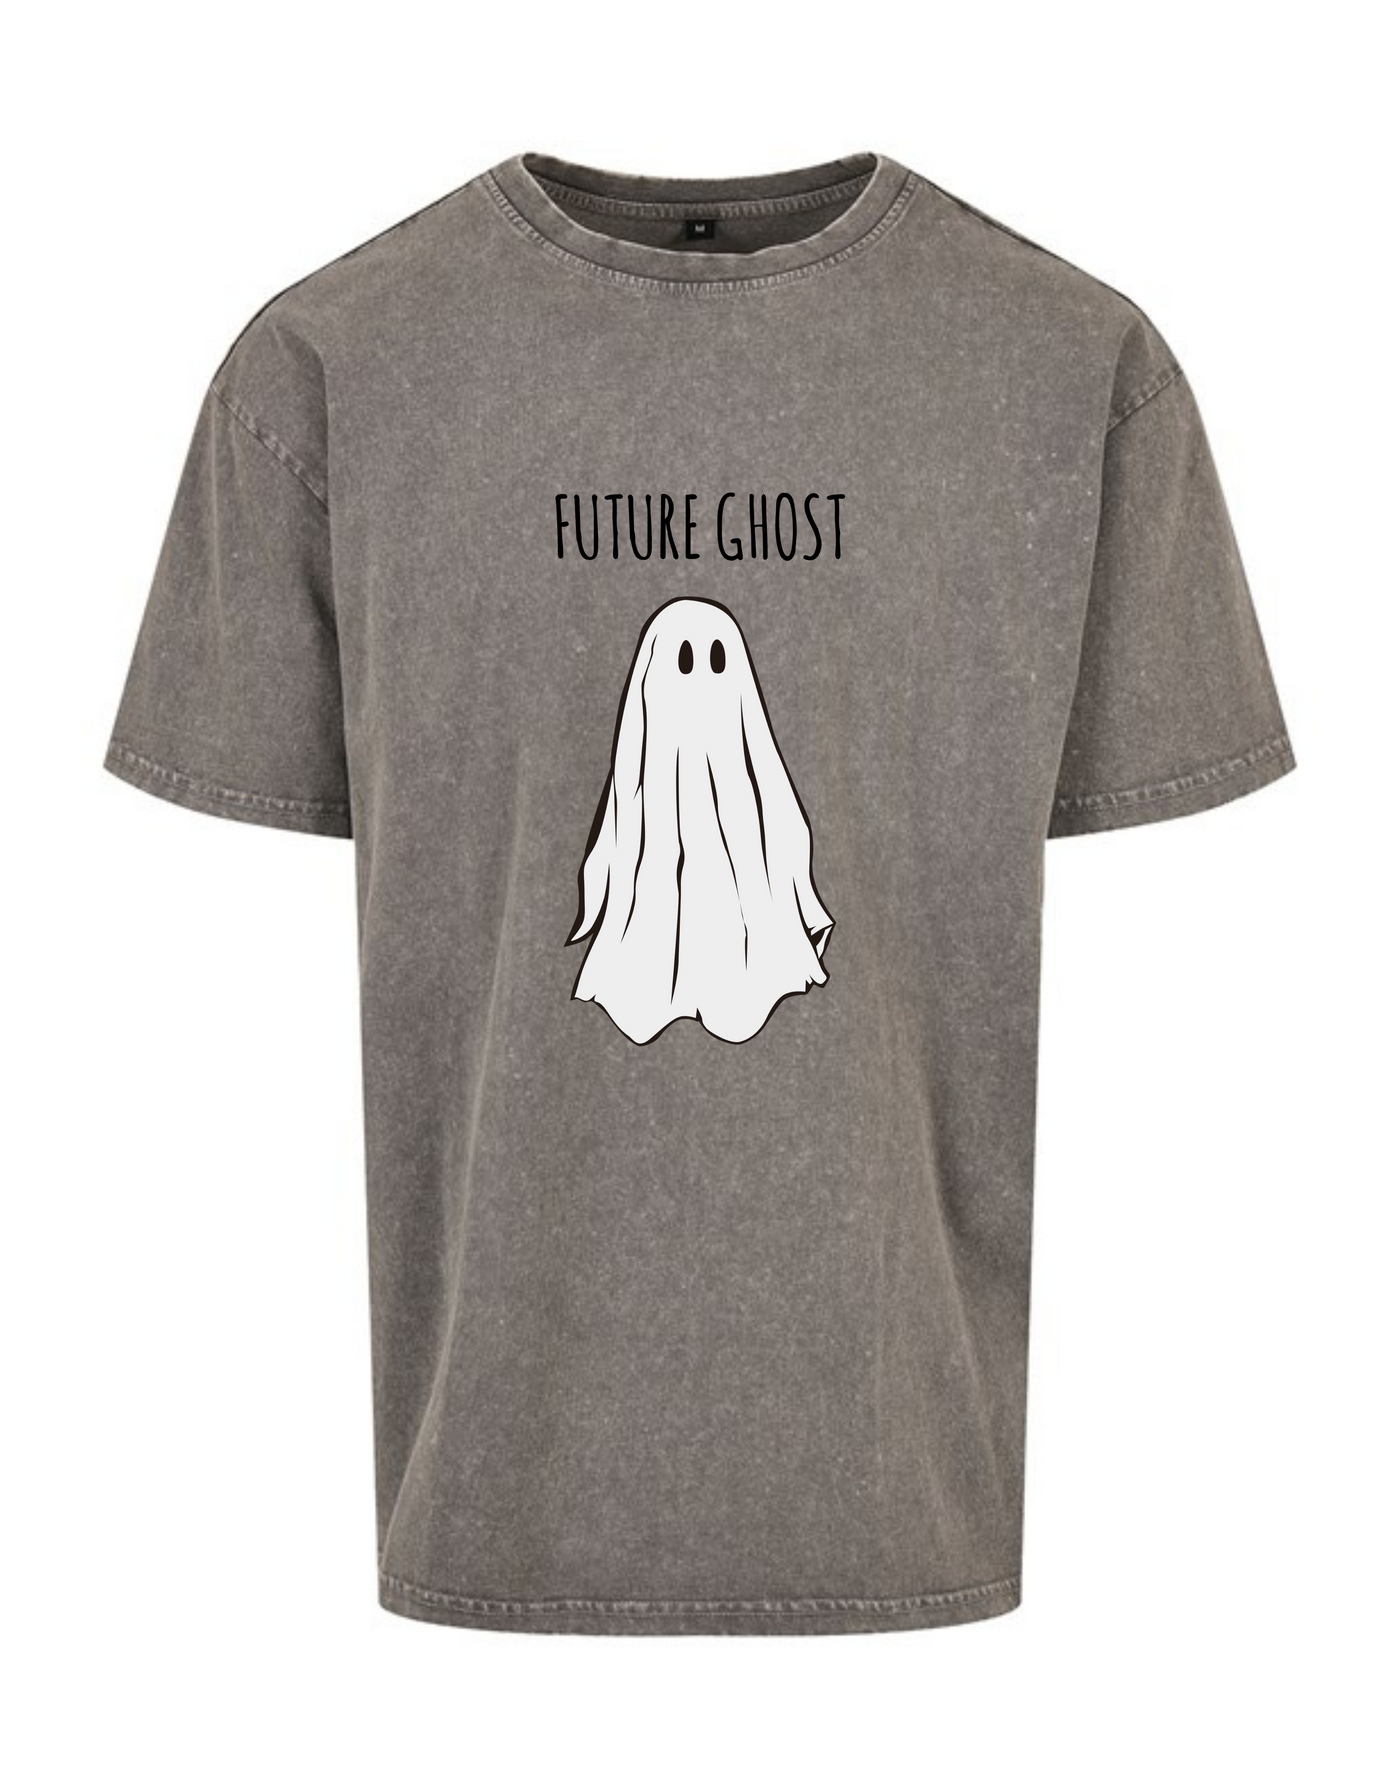 Charcoal "Future Ghost" Unisex Acid Wash T-Shirt